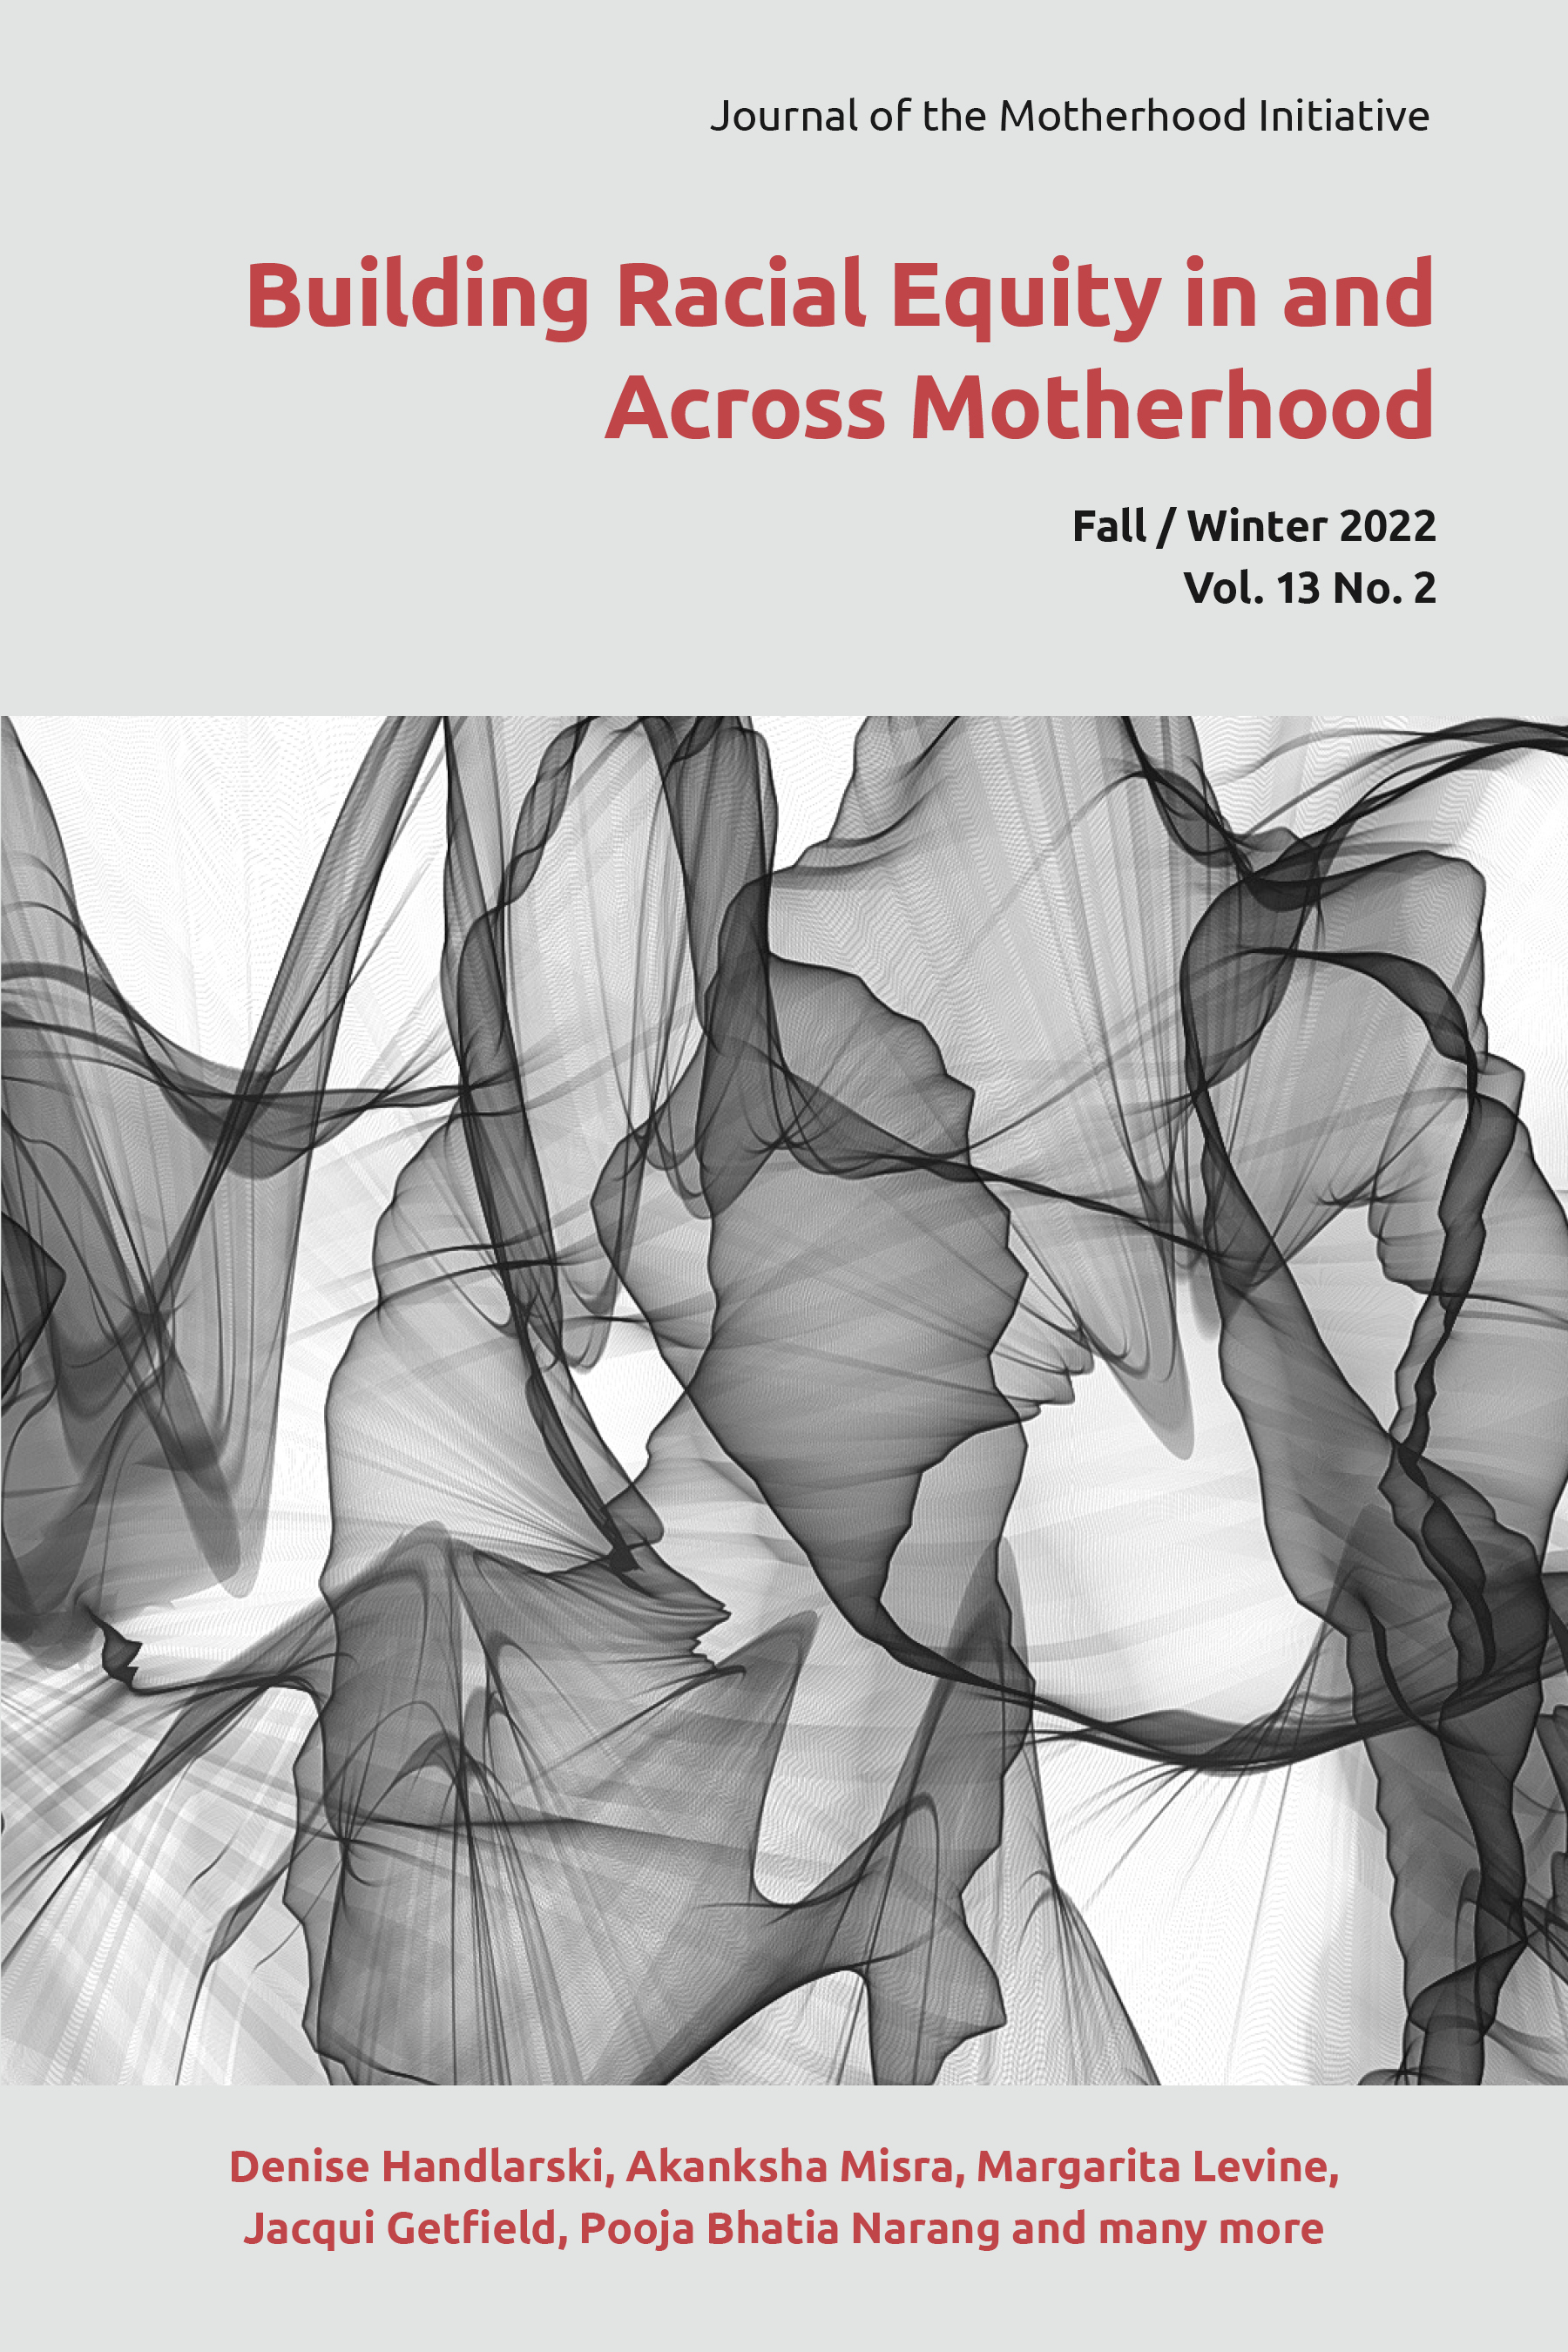 					View Journal of the Motherhood Initiative Volume 13, No 2 Fall/Winter 2022
				